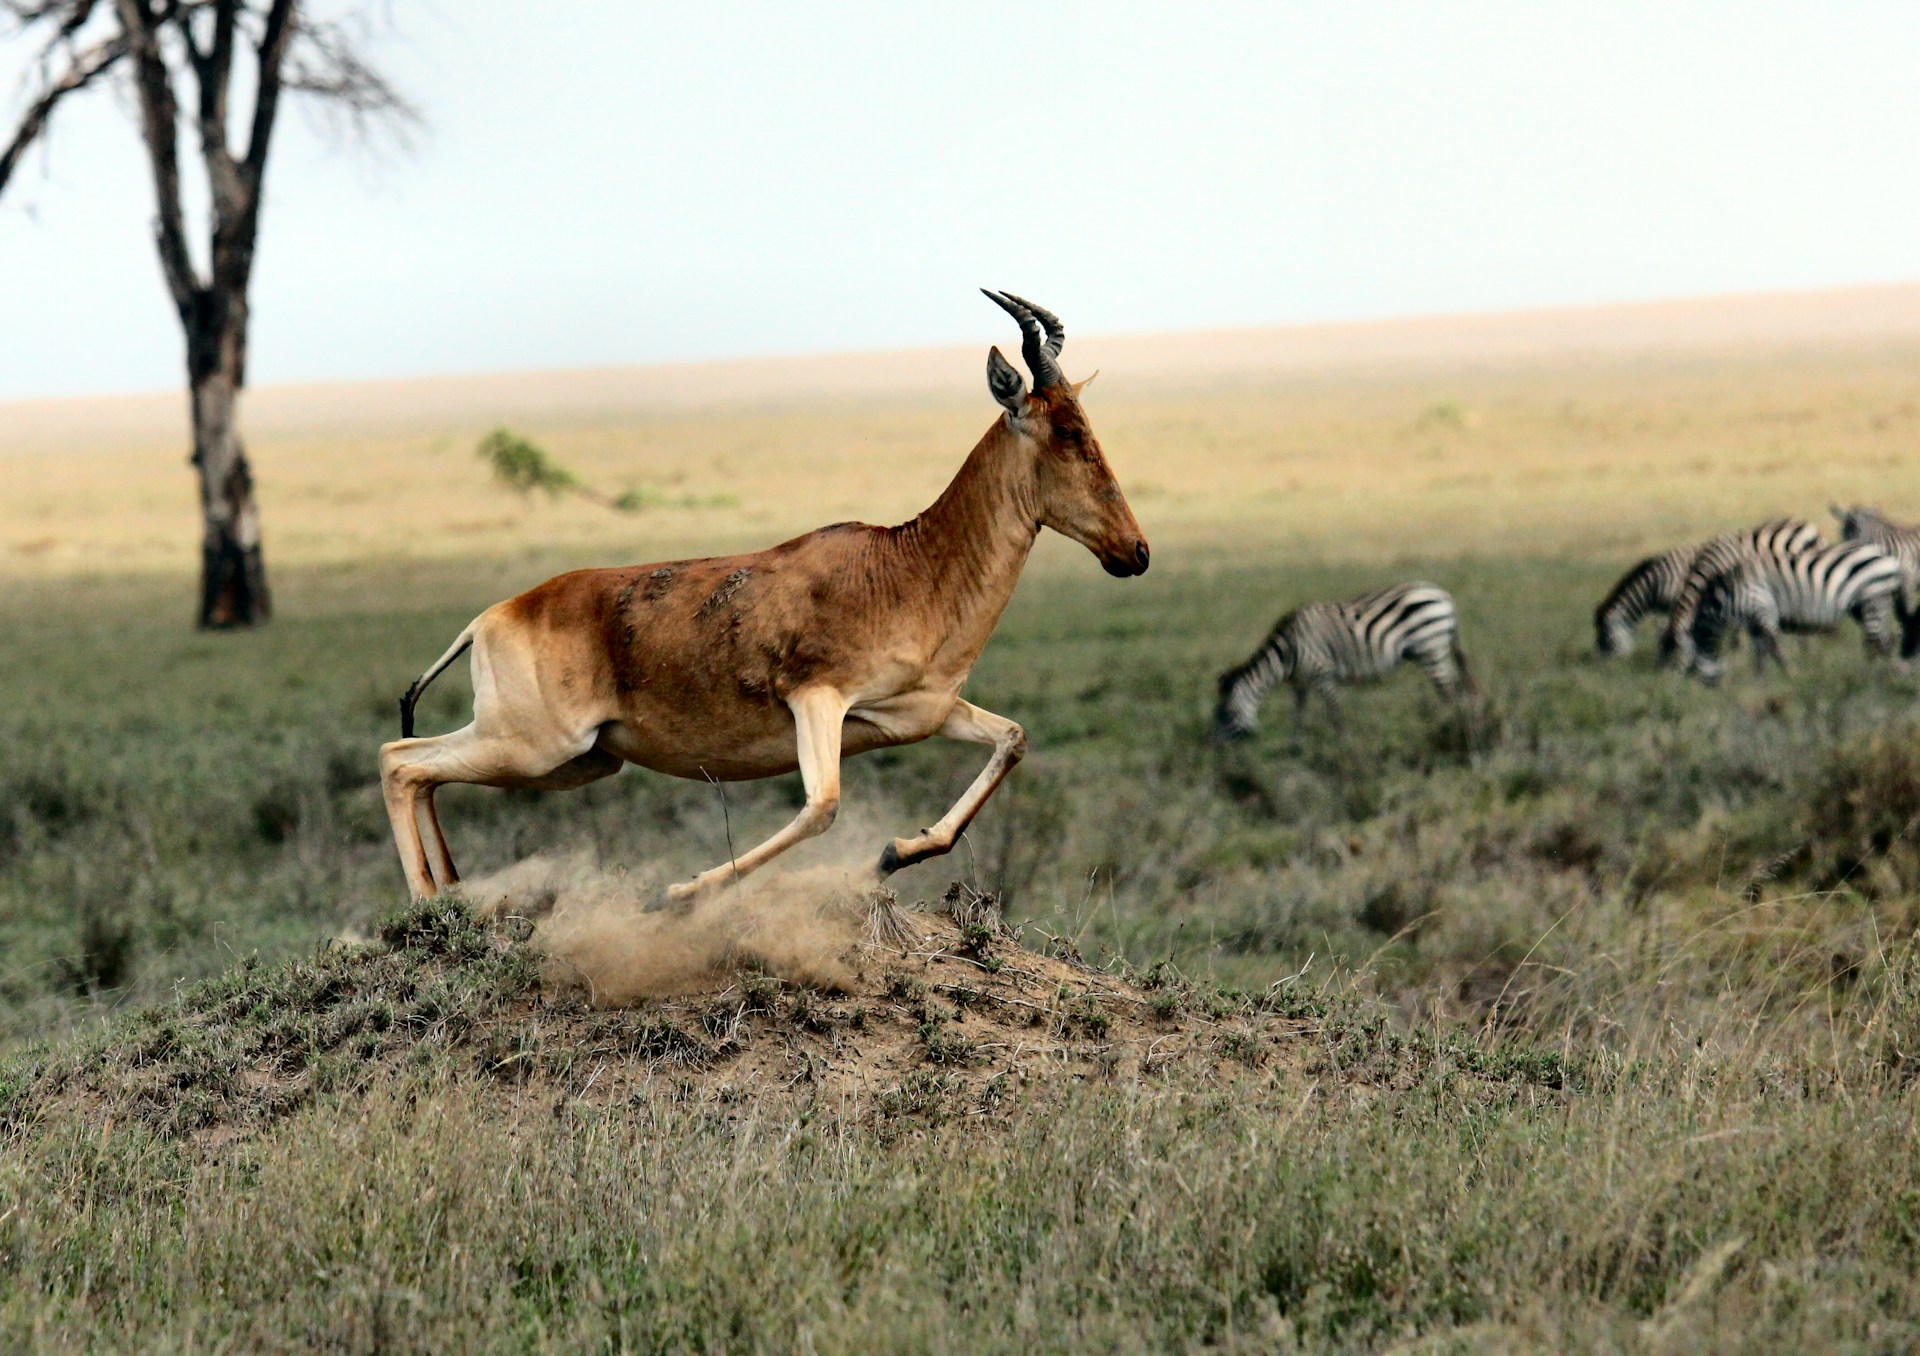 Serengeti Central (Seronera)